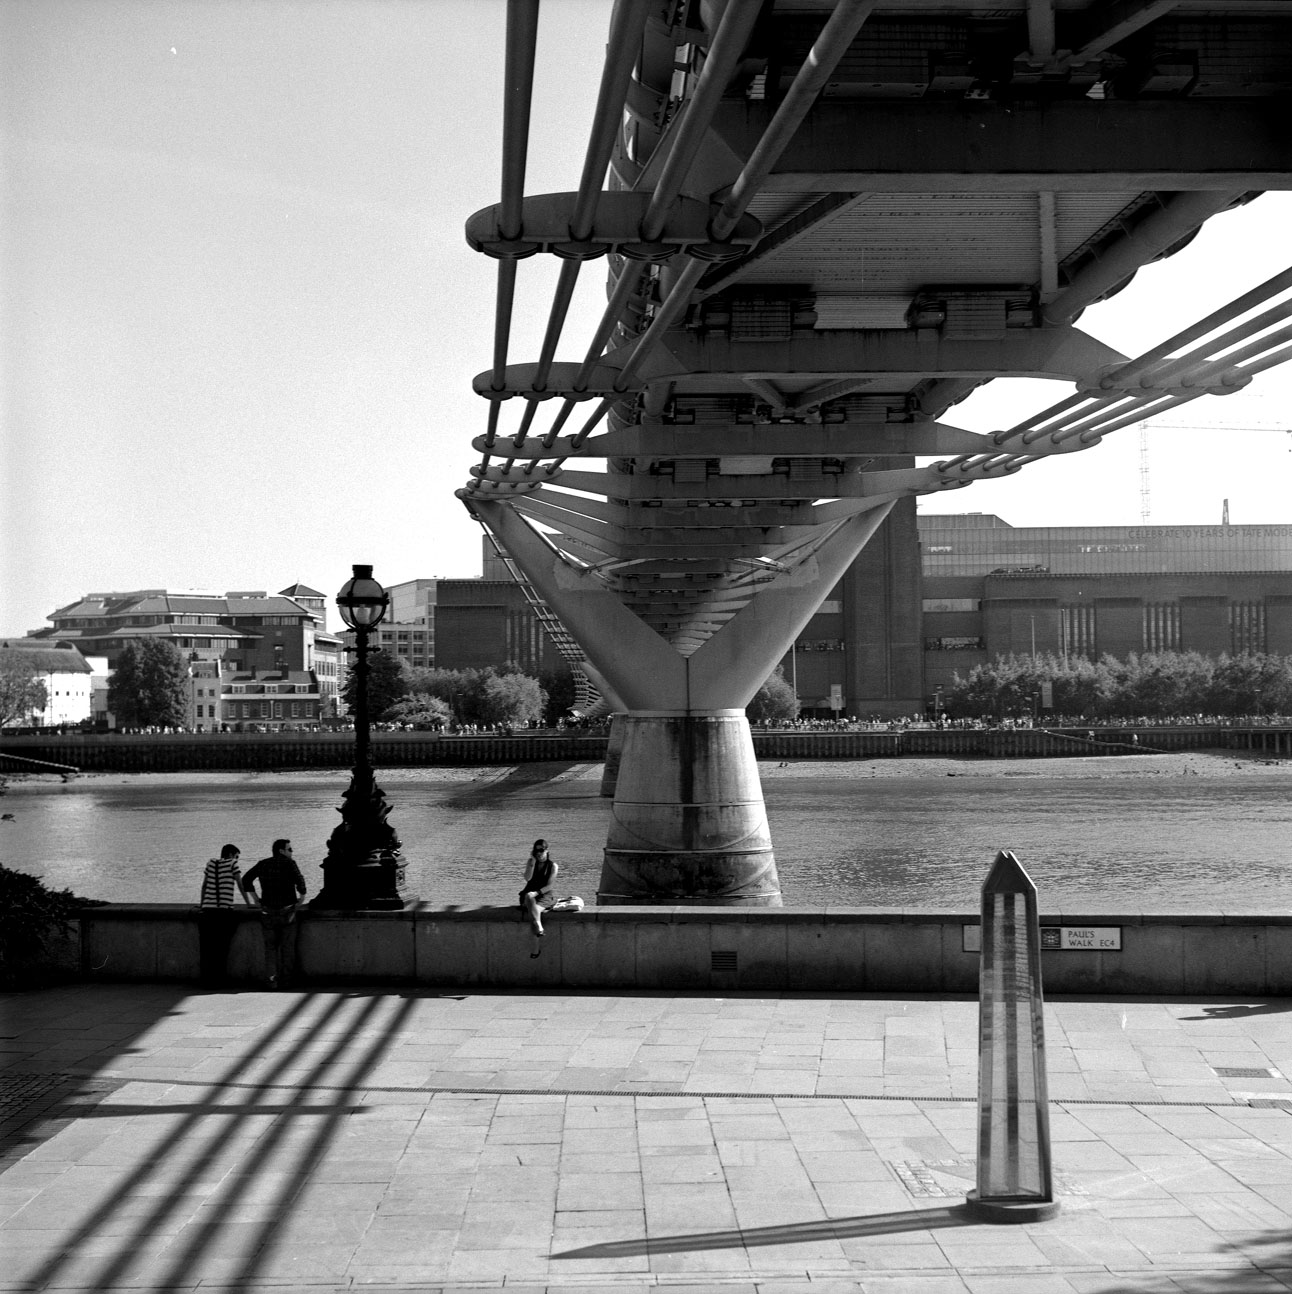 fotka / image Millenium Bridge, Summer in London